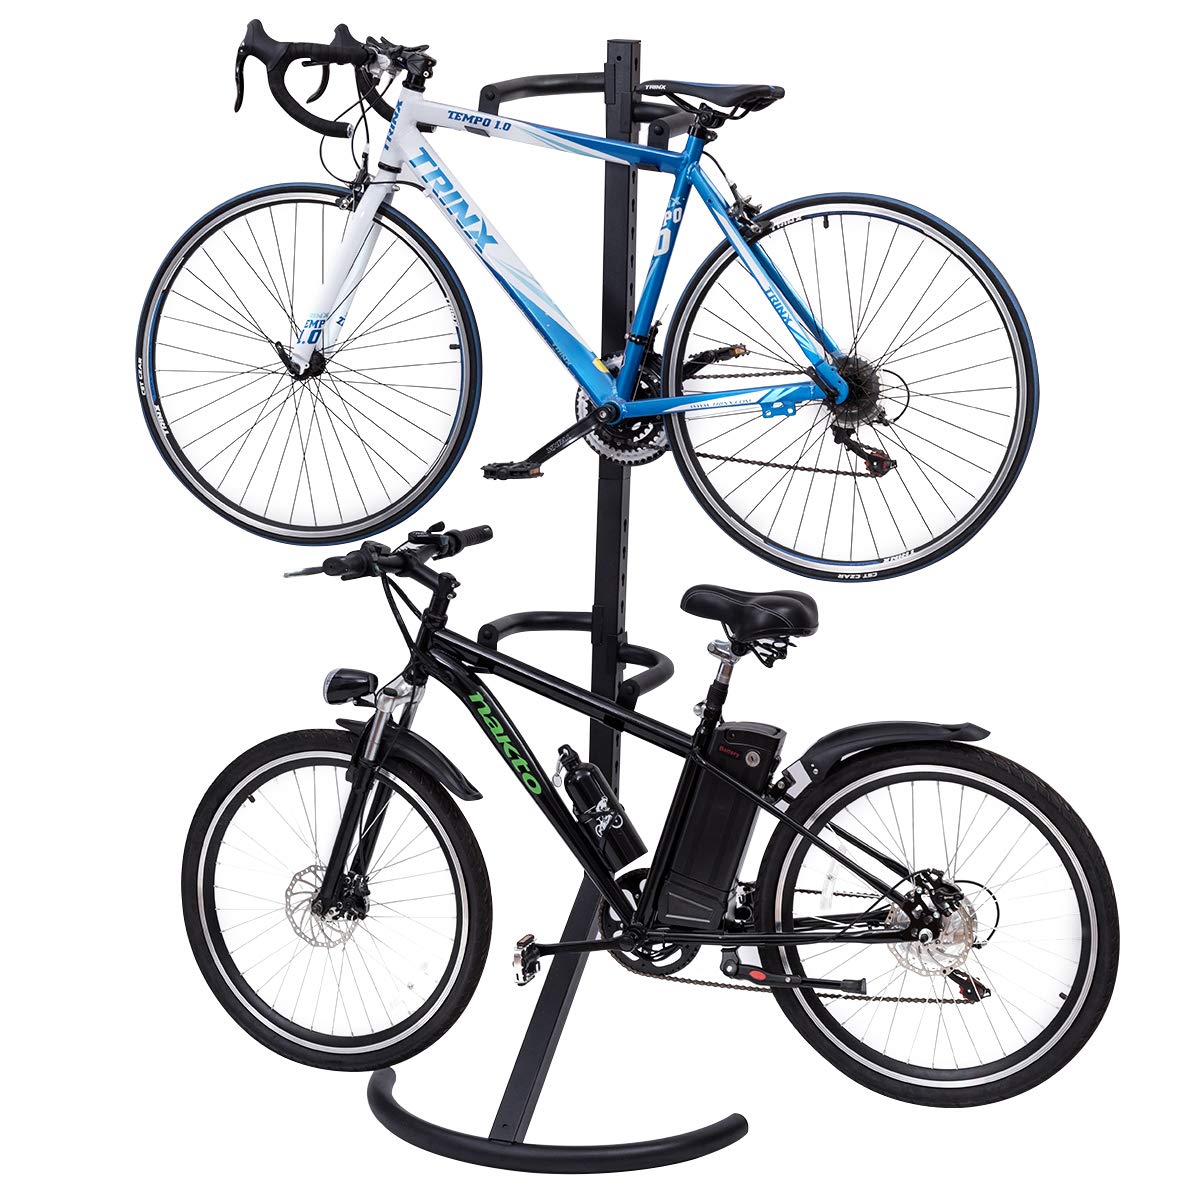 Goplus Gravity Freestanding Bike Stand Adjustable Height